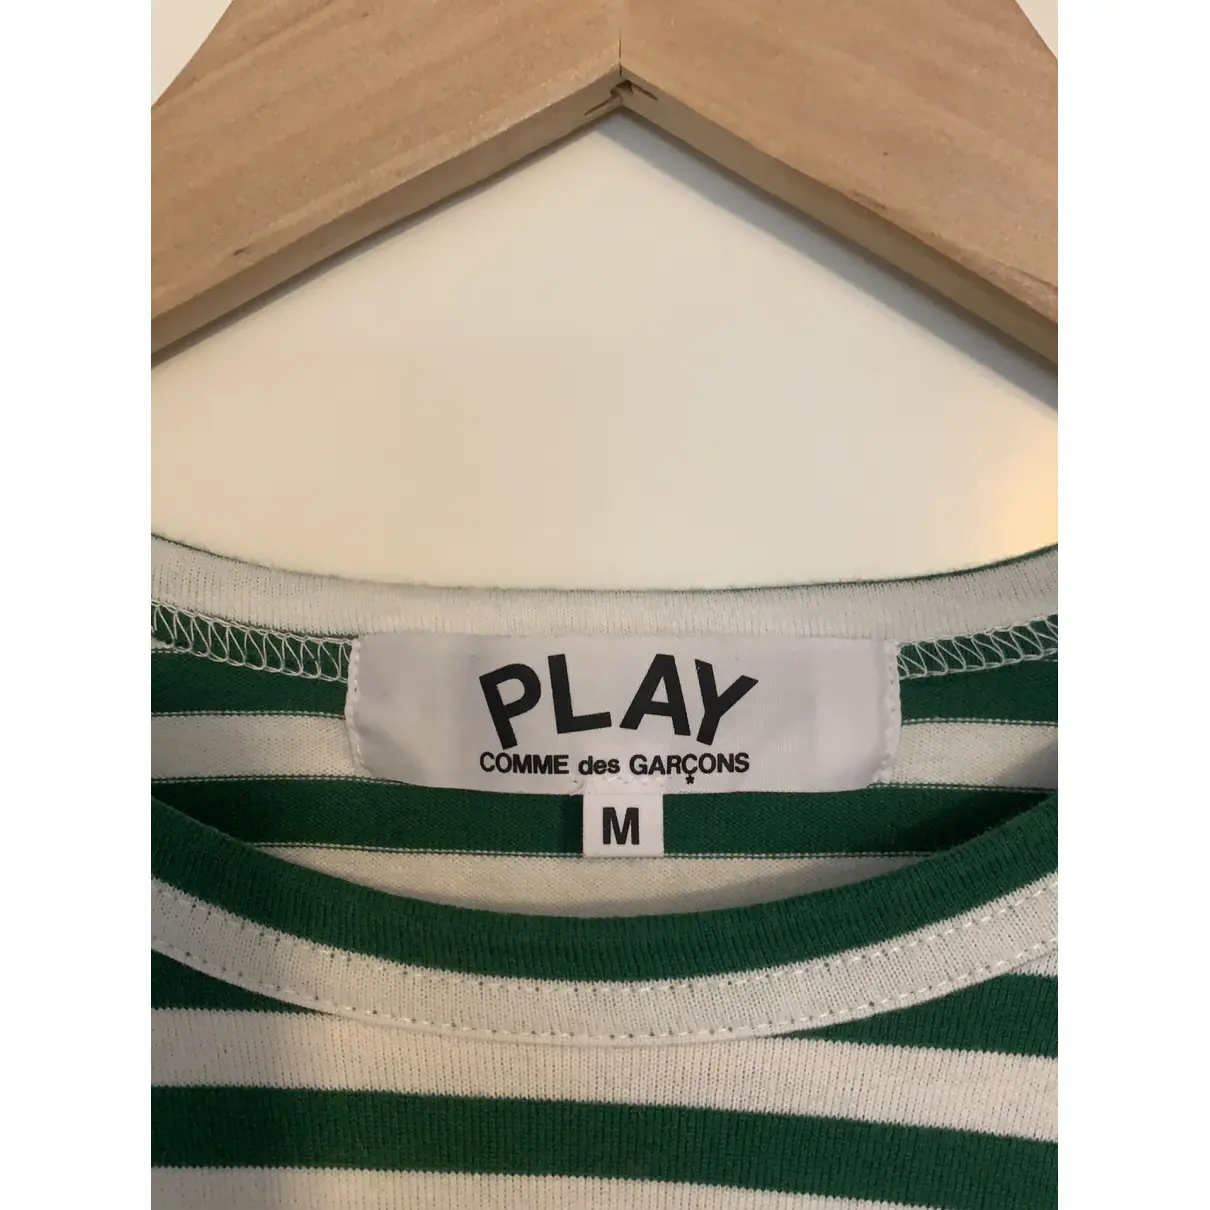 Buy Play Comme des Garçons T-shirt online